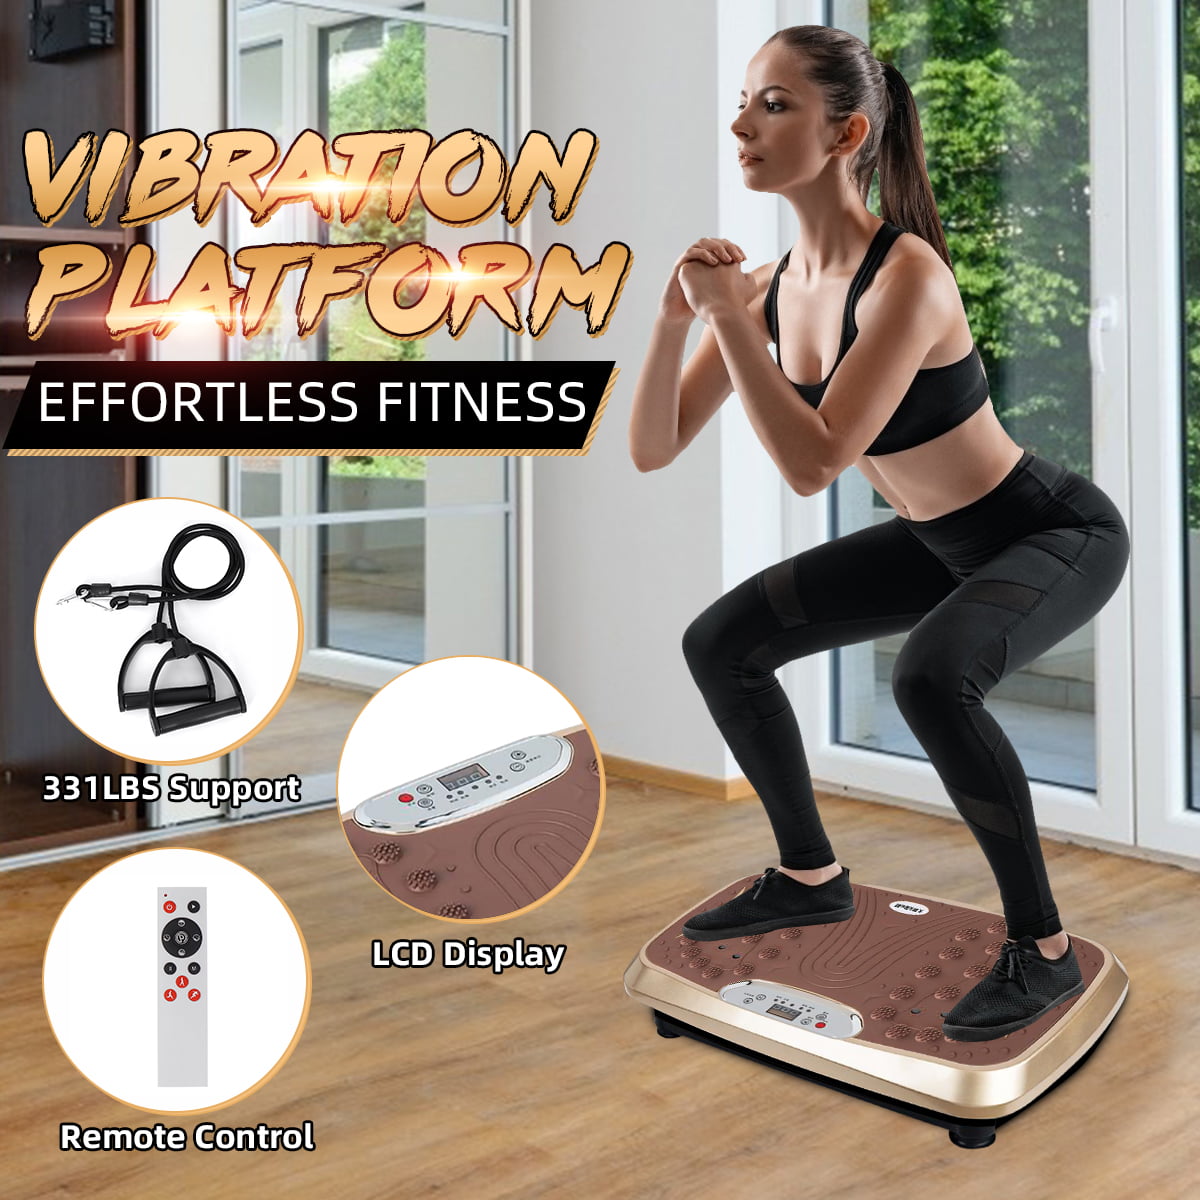 Slim Full Body Oscillating Vibration Platform Fitness Exercise Machine From US 